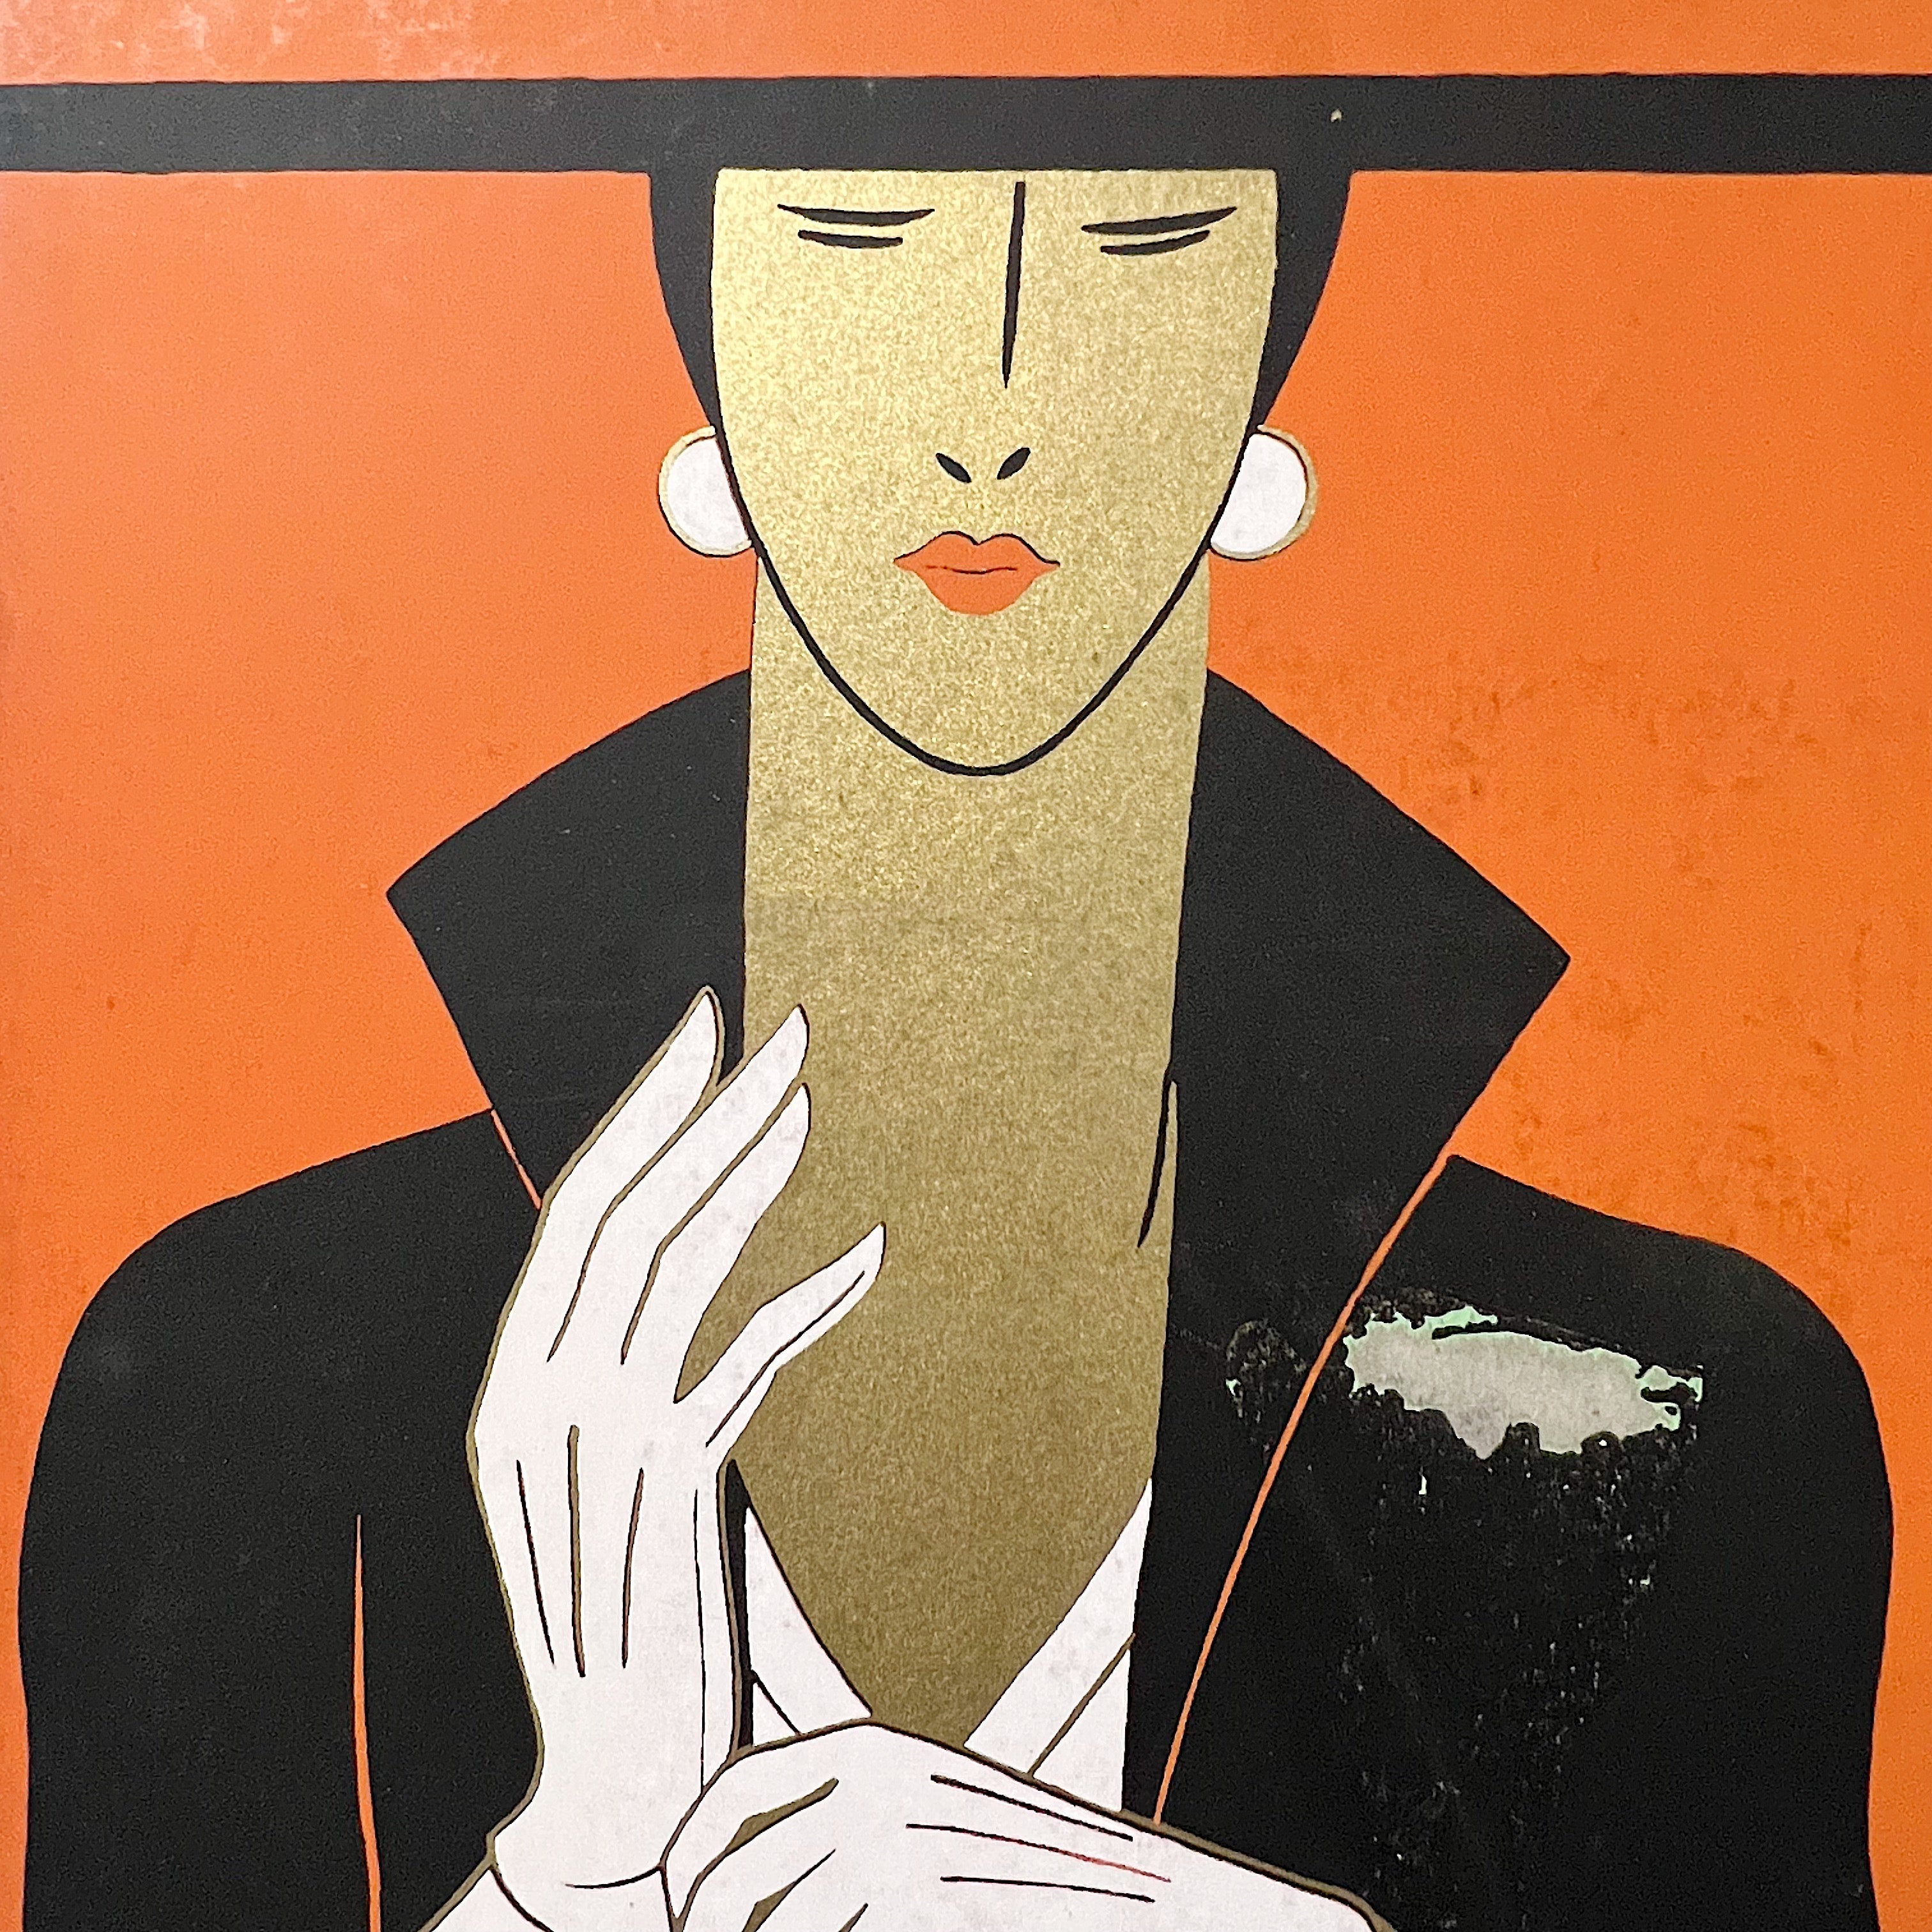 1930s Illustration Art Store Display - Art Deco Neck Ties Painting on Board - Antique Illustrator Artwork - Sleek Design - Peaky Blinders